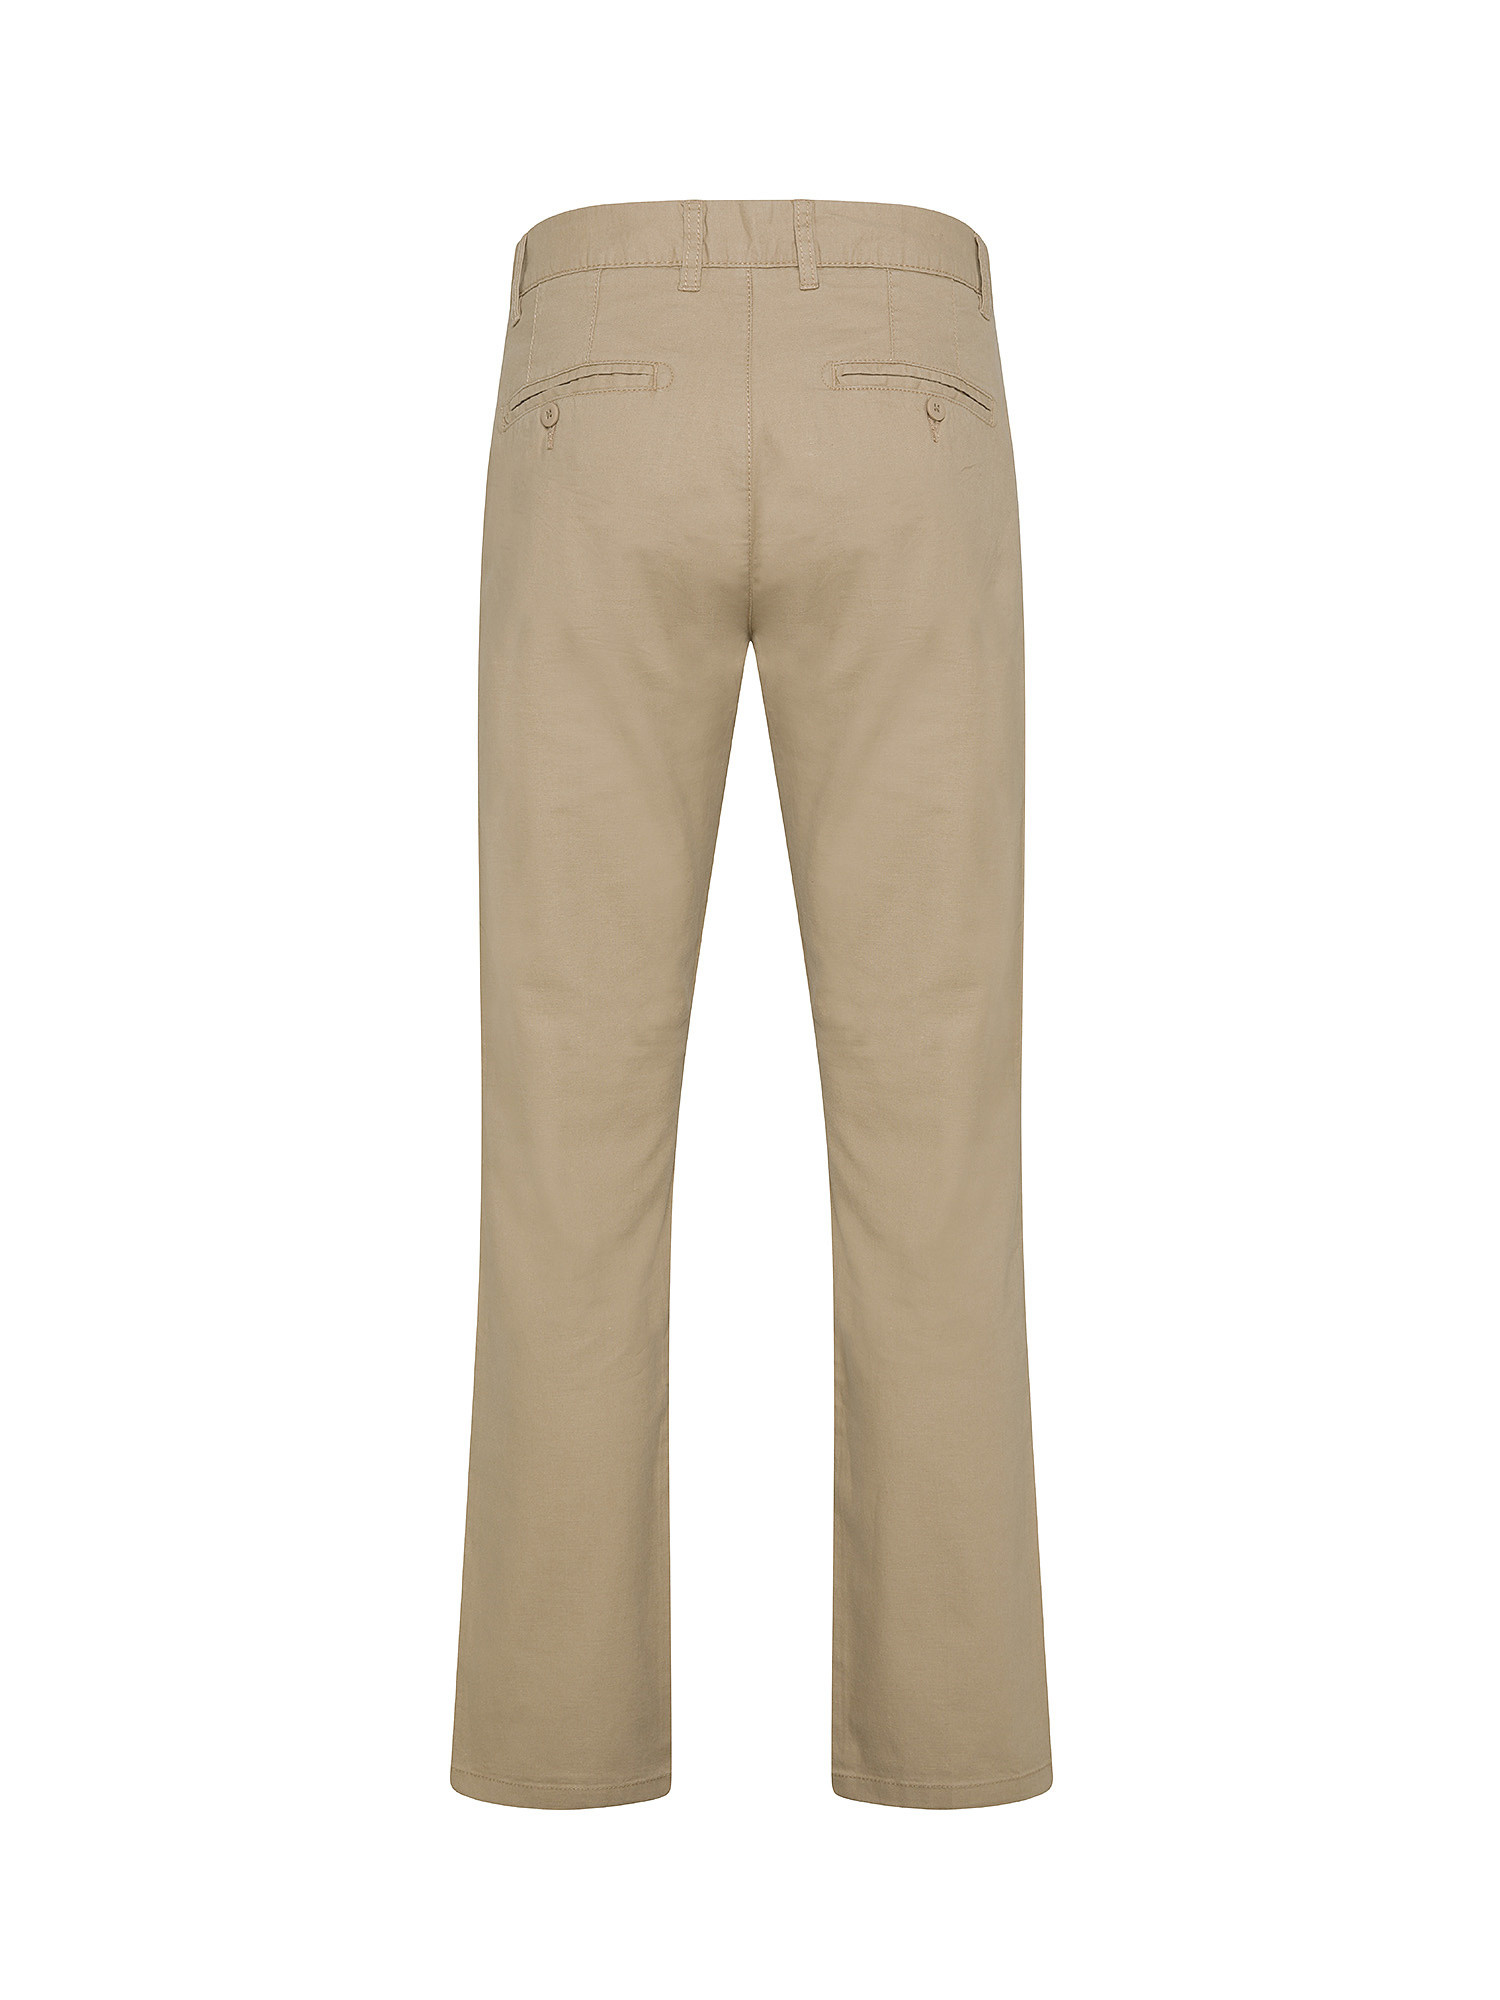 JCT - Pantaloni chino in misto lino, Beige scuro, large image number 1